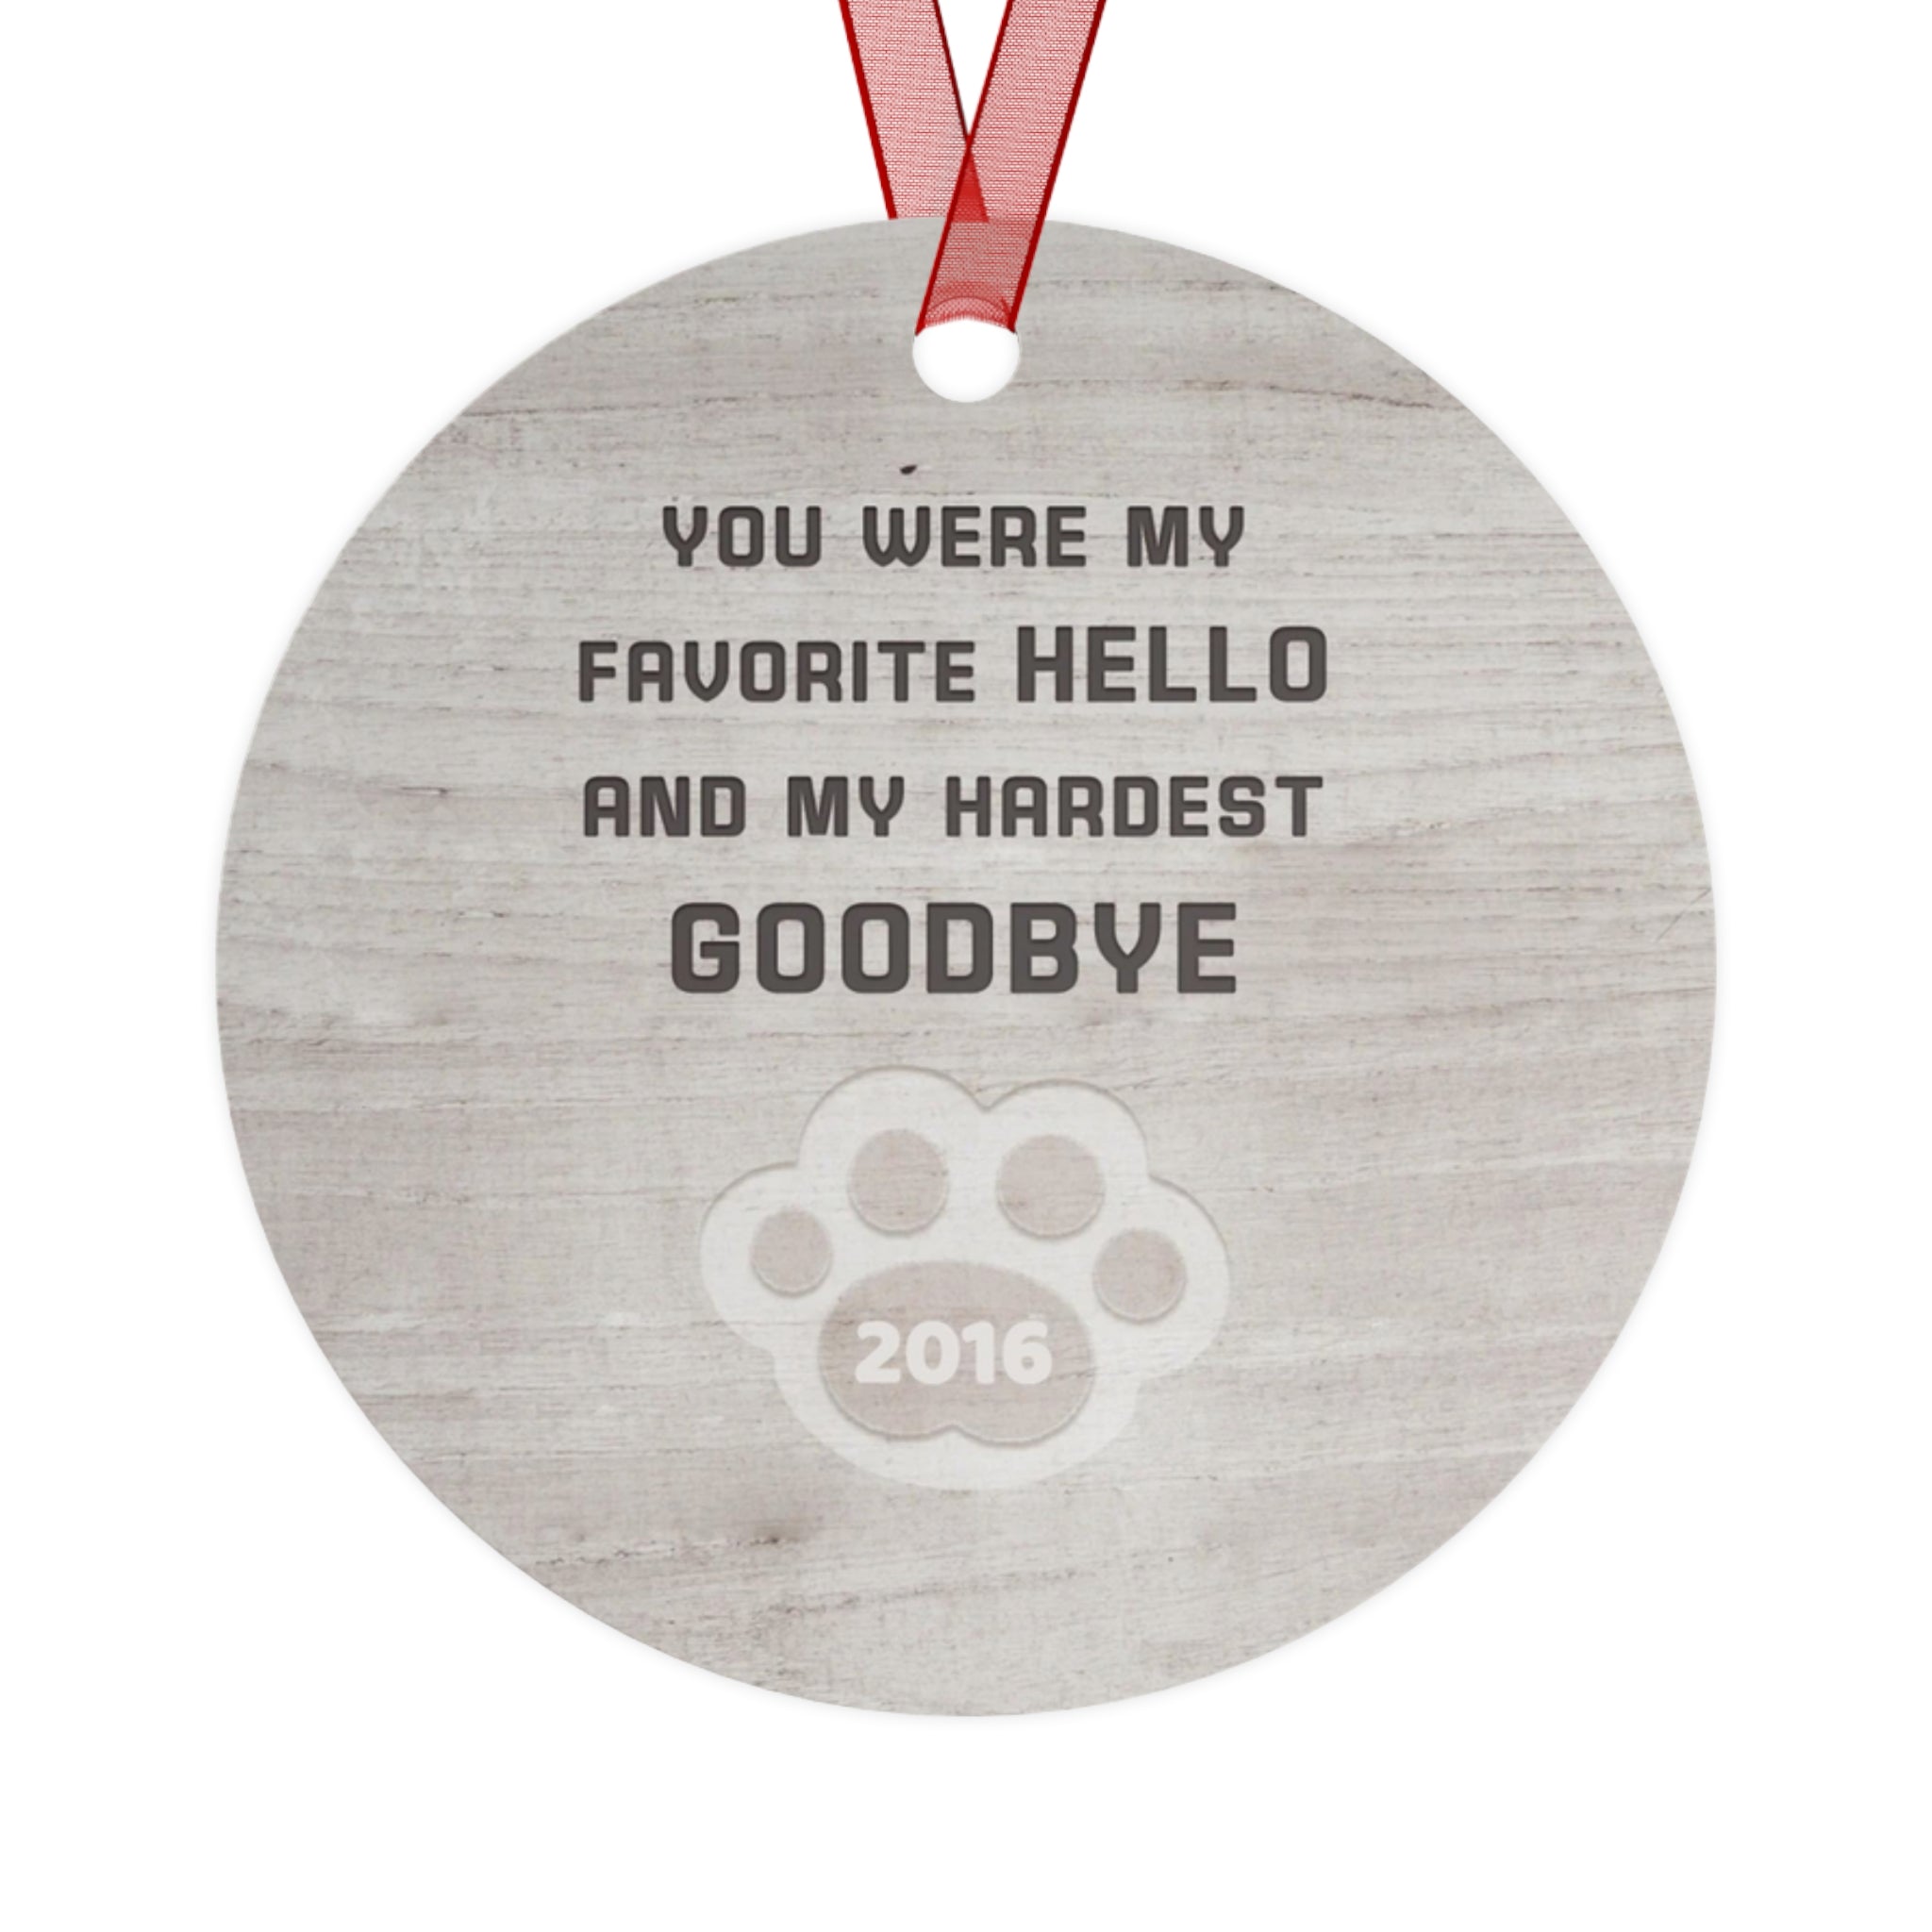 My Hardest Goodbye - Personalized Metal Ornament